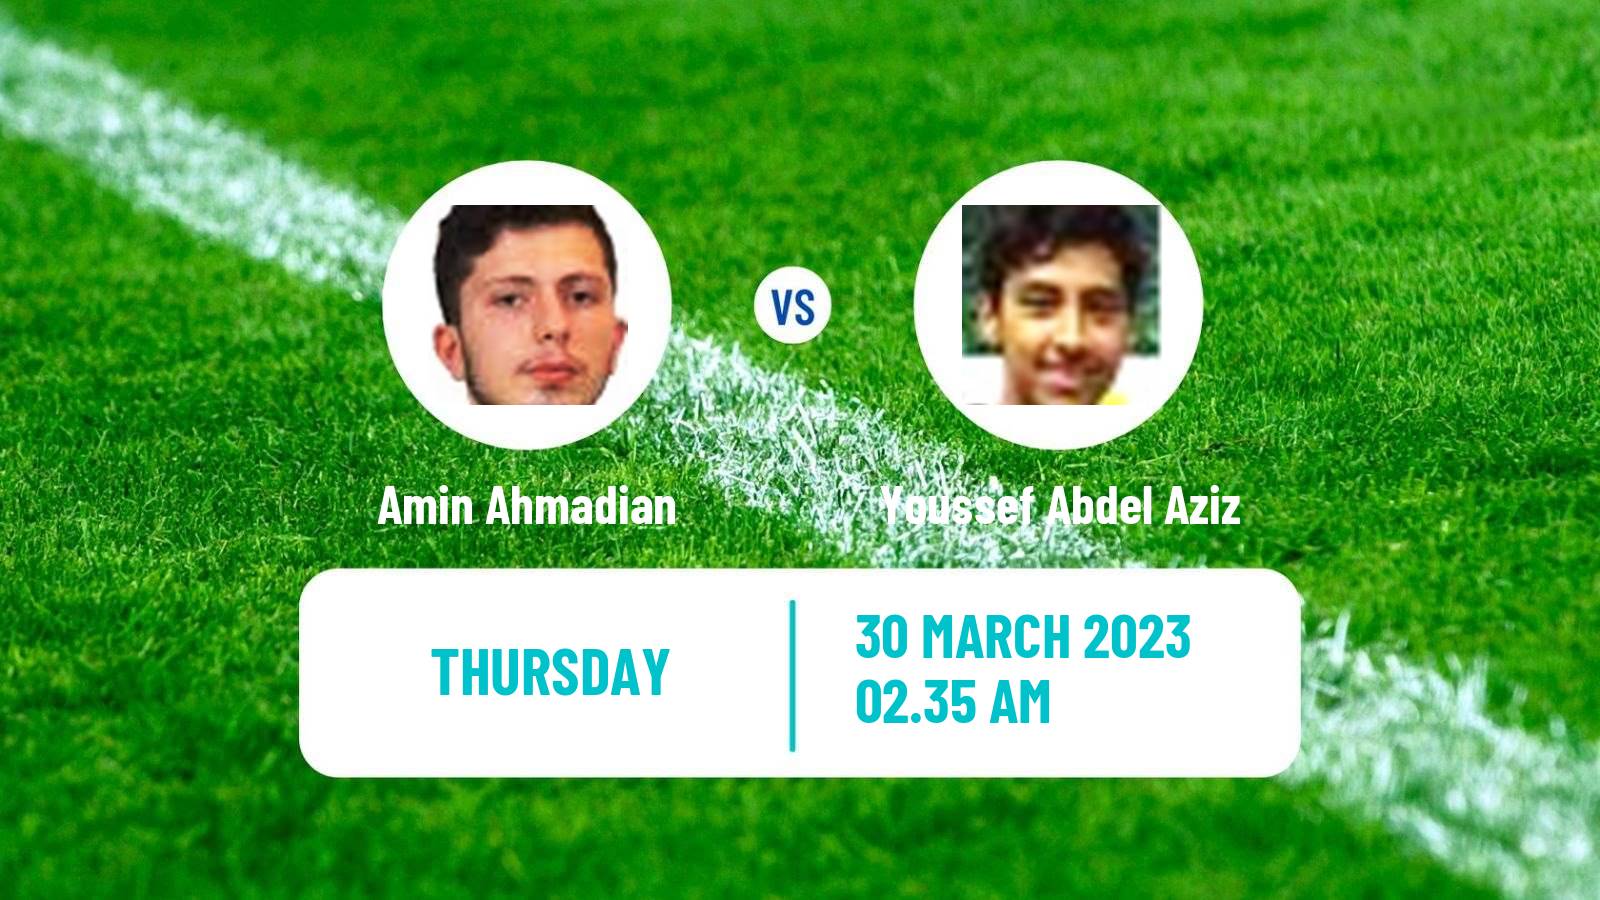 Table tennis Table Tennis Amin Ahmadian - Youssef Abdel Aziz